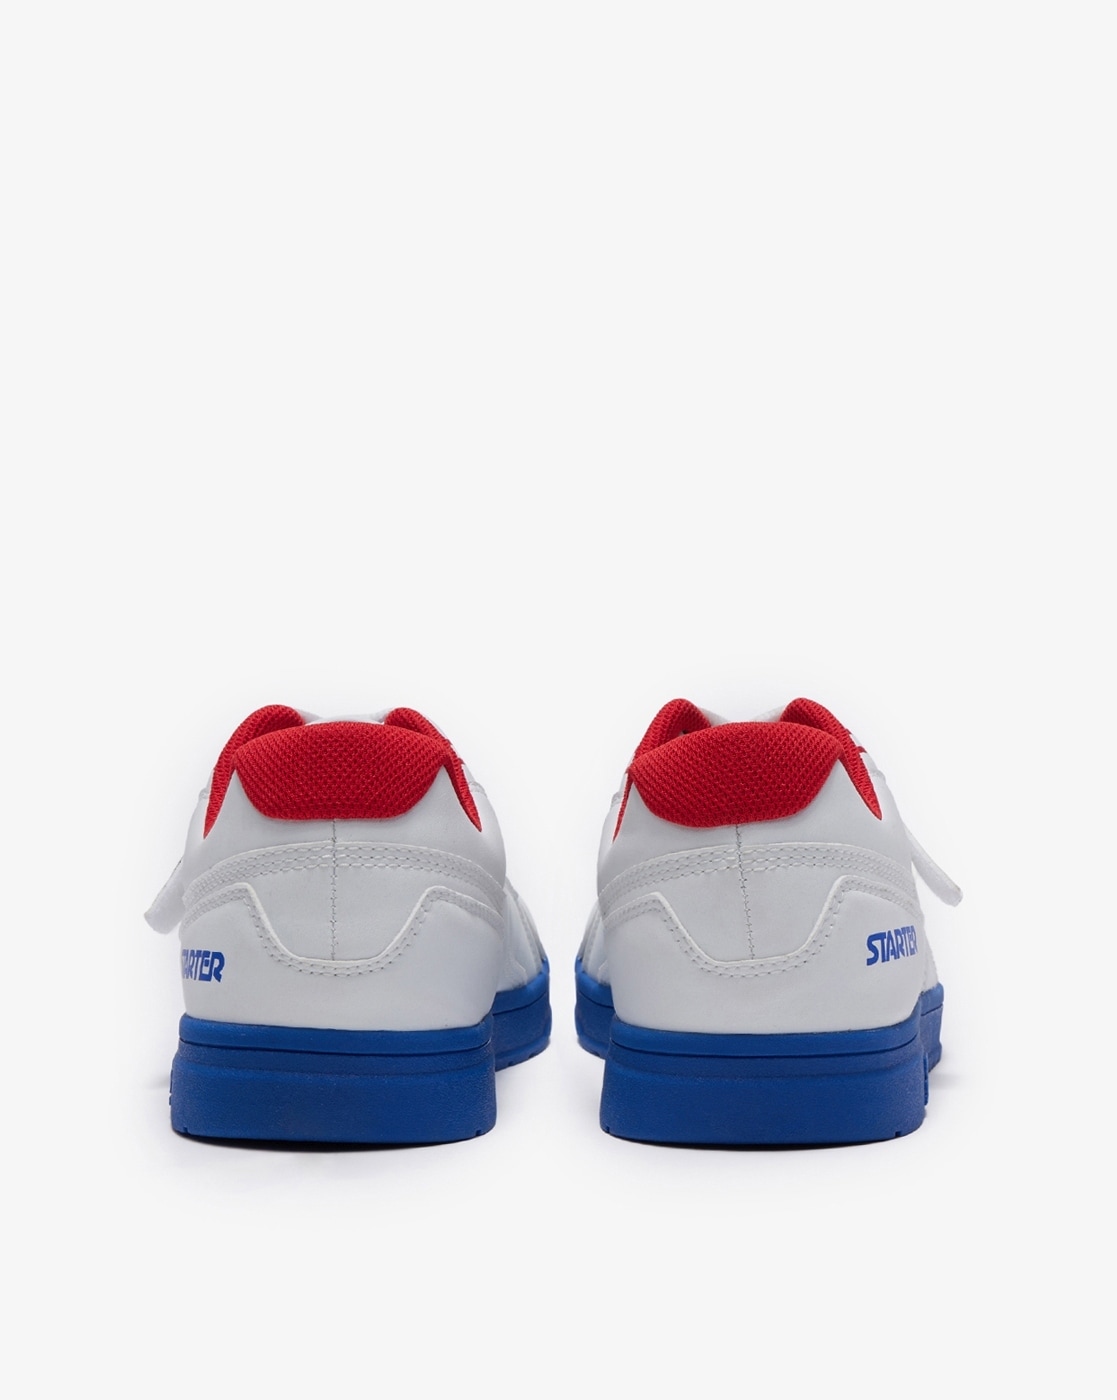 Starter Sneakers, White, Size 11 | eBay